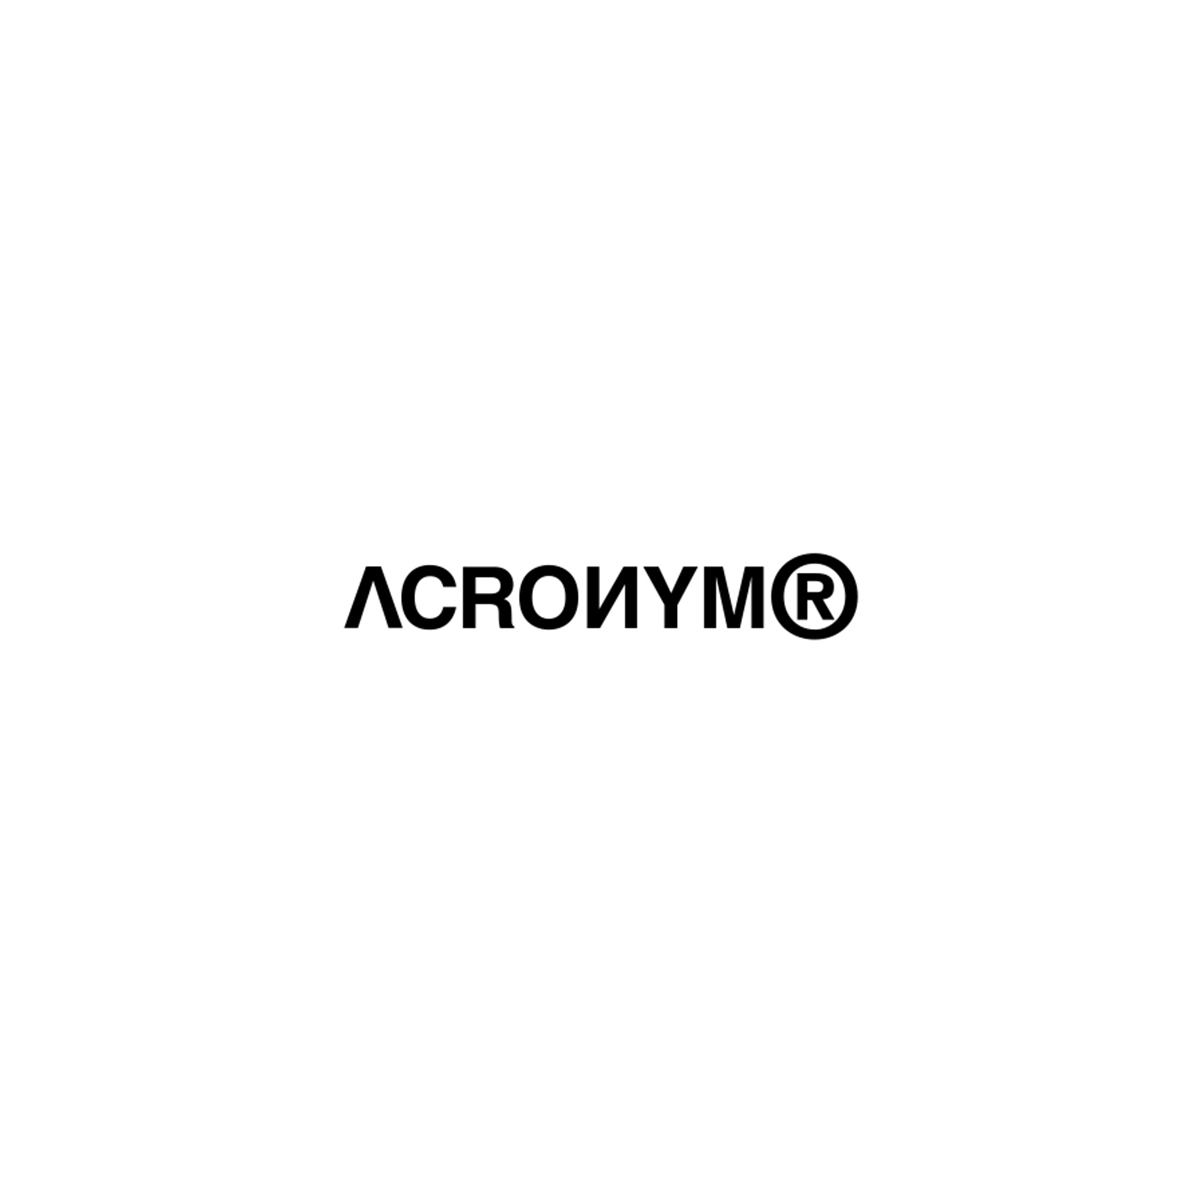 ACRONYM®-アクロニウム- 24SS 2月29日発売開始